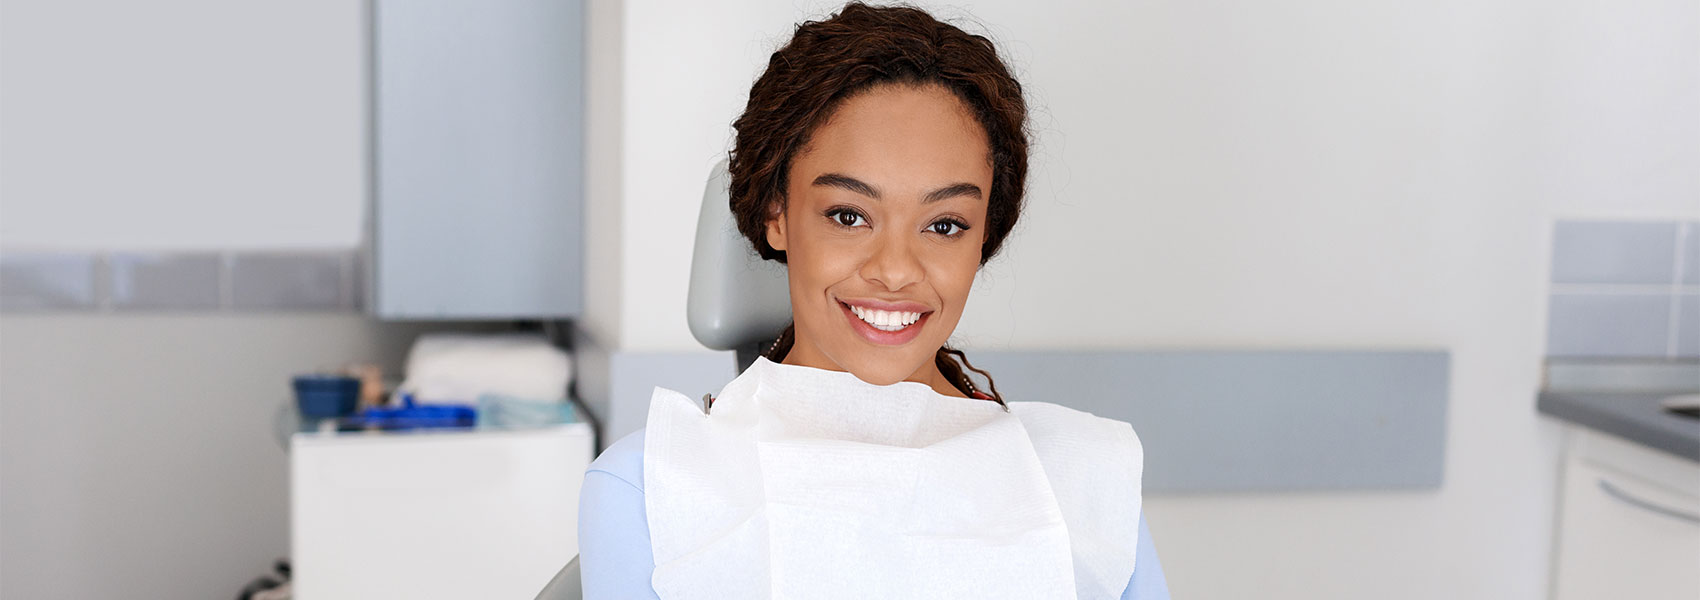 Lady smiling at dental